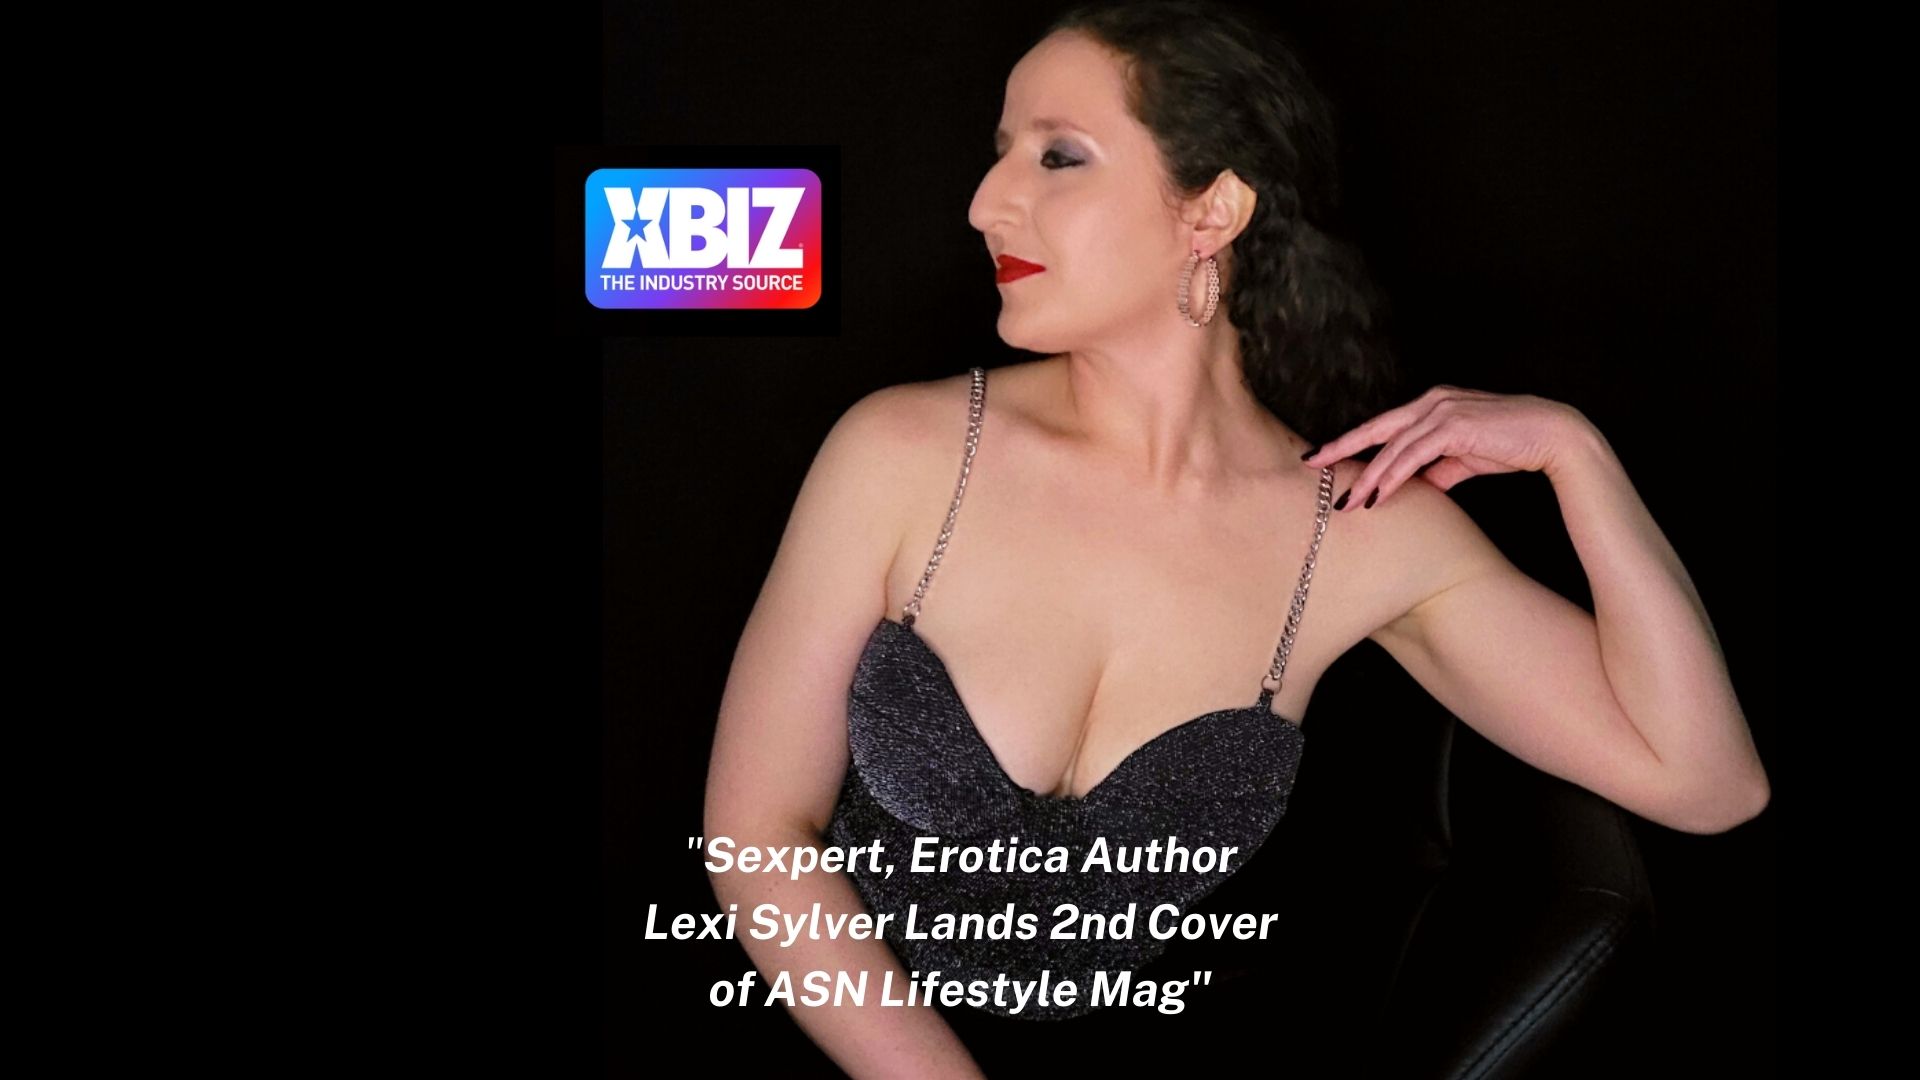 “Sexpert, Erotica Author Lexi Sylver Lands 2nd Cover of ASN Lifestyle Mag” — XBIZ Press Release